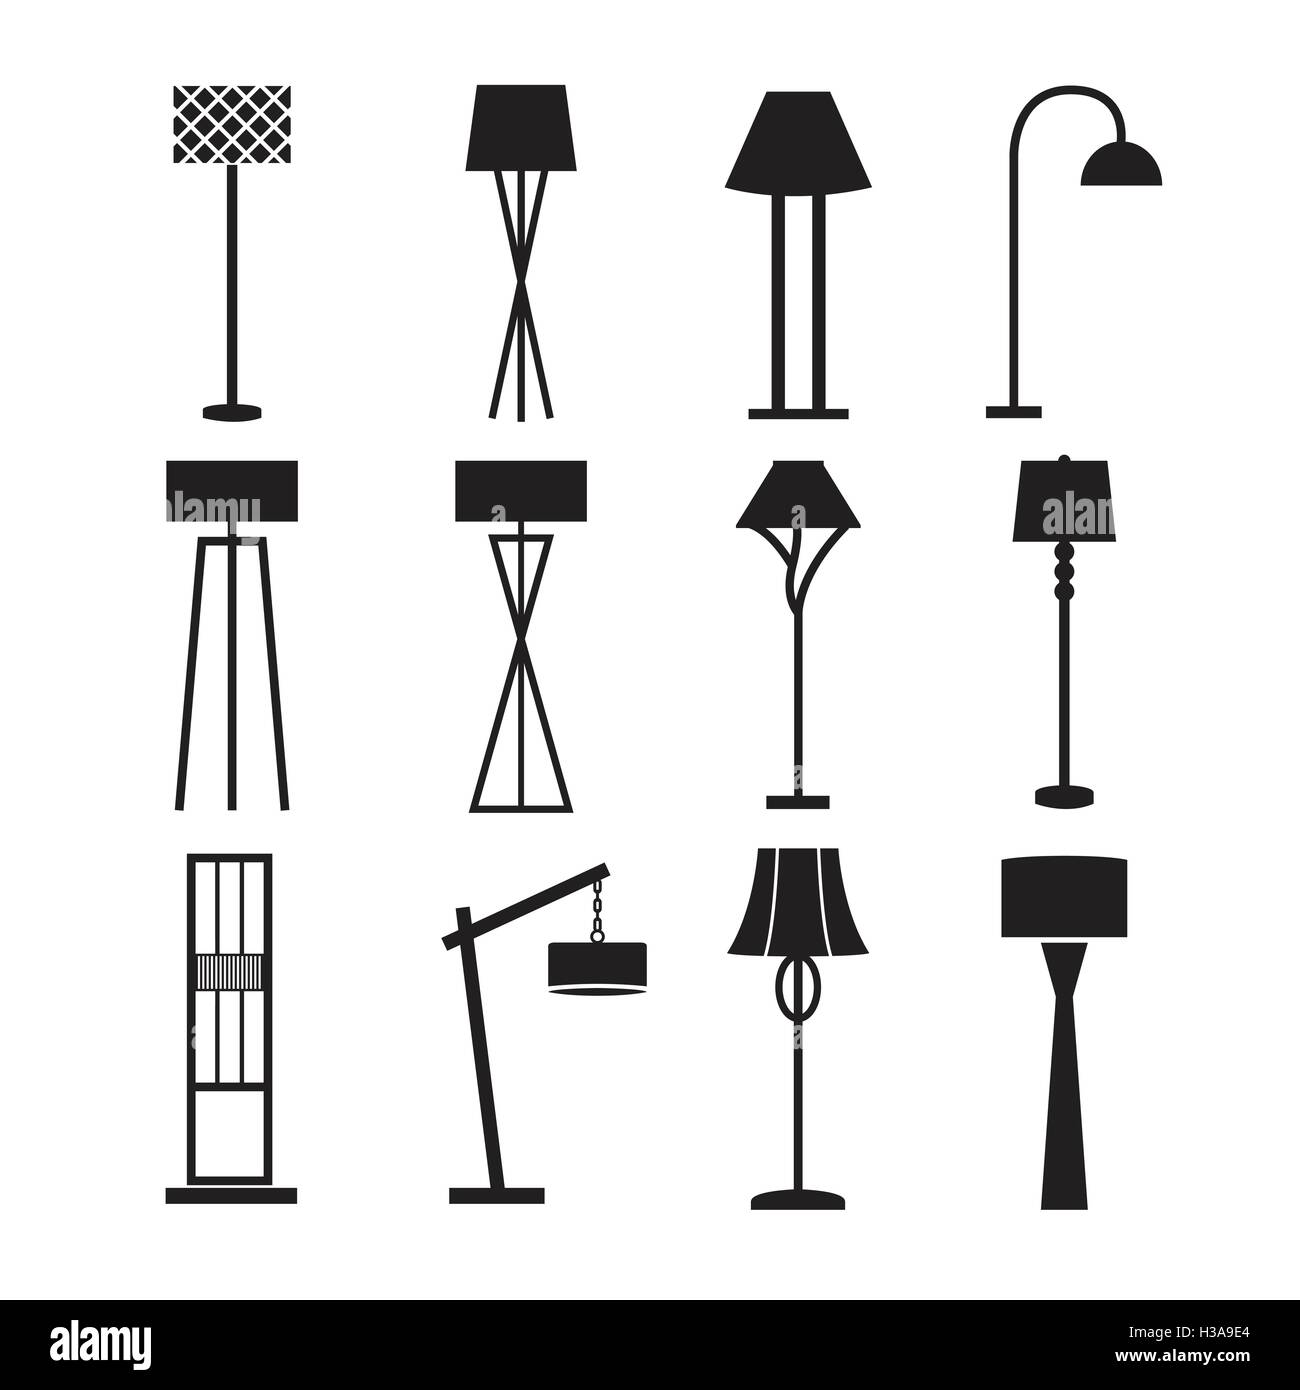 lamp vector, floor lamp, decorate lamp icon set Stock Vector